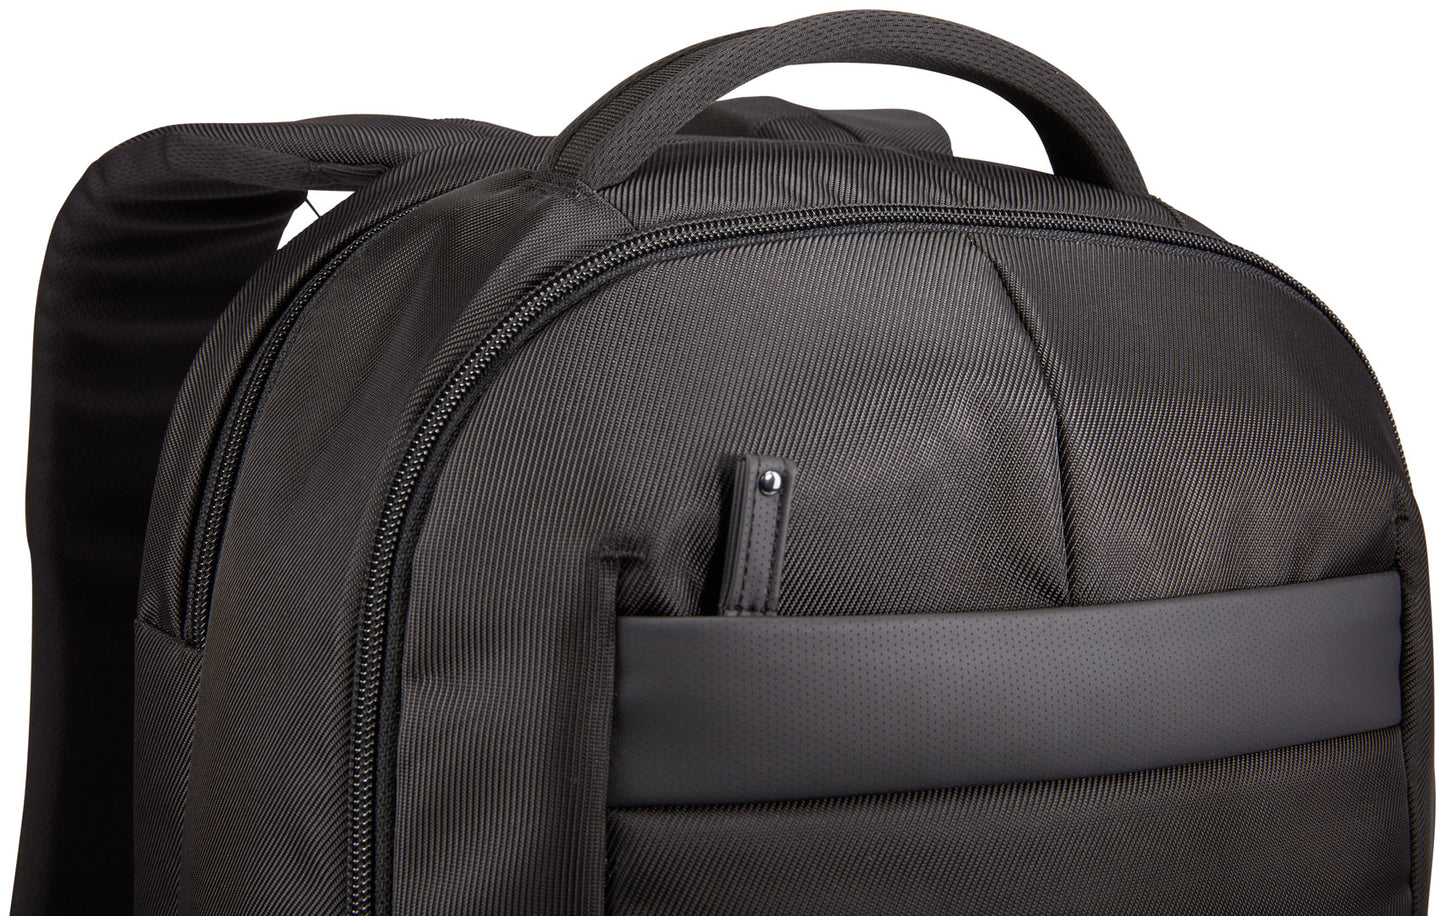 Notion backpack for laptops up to 15.6" Case Logic NOTIBP-116 Black